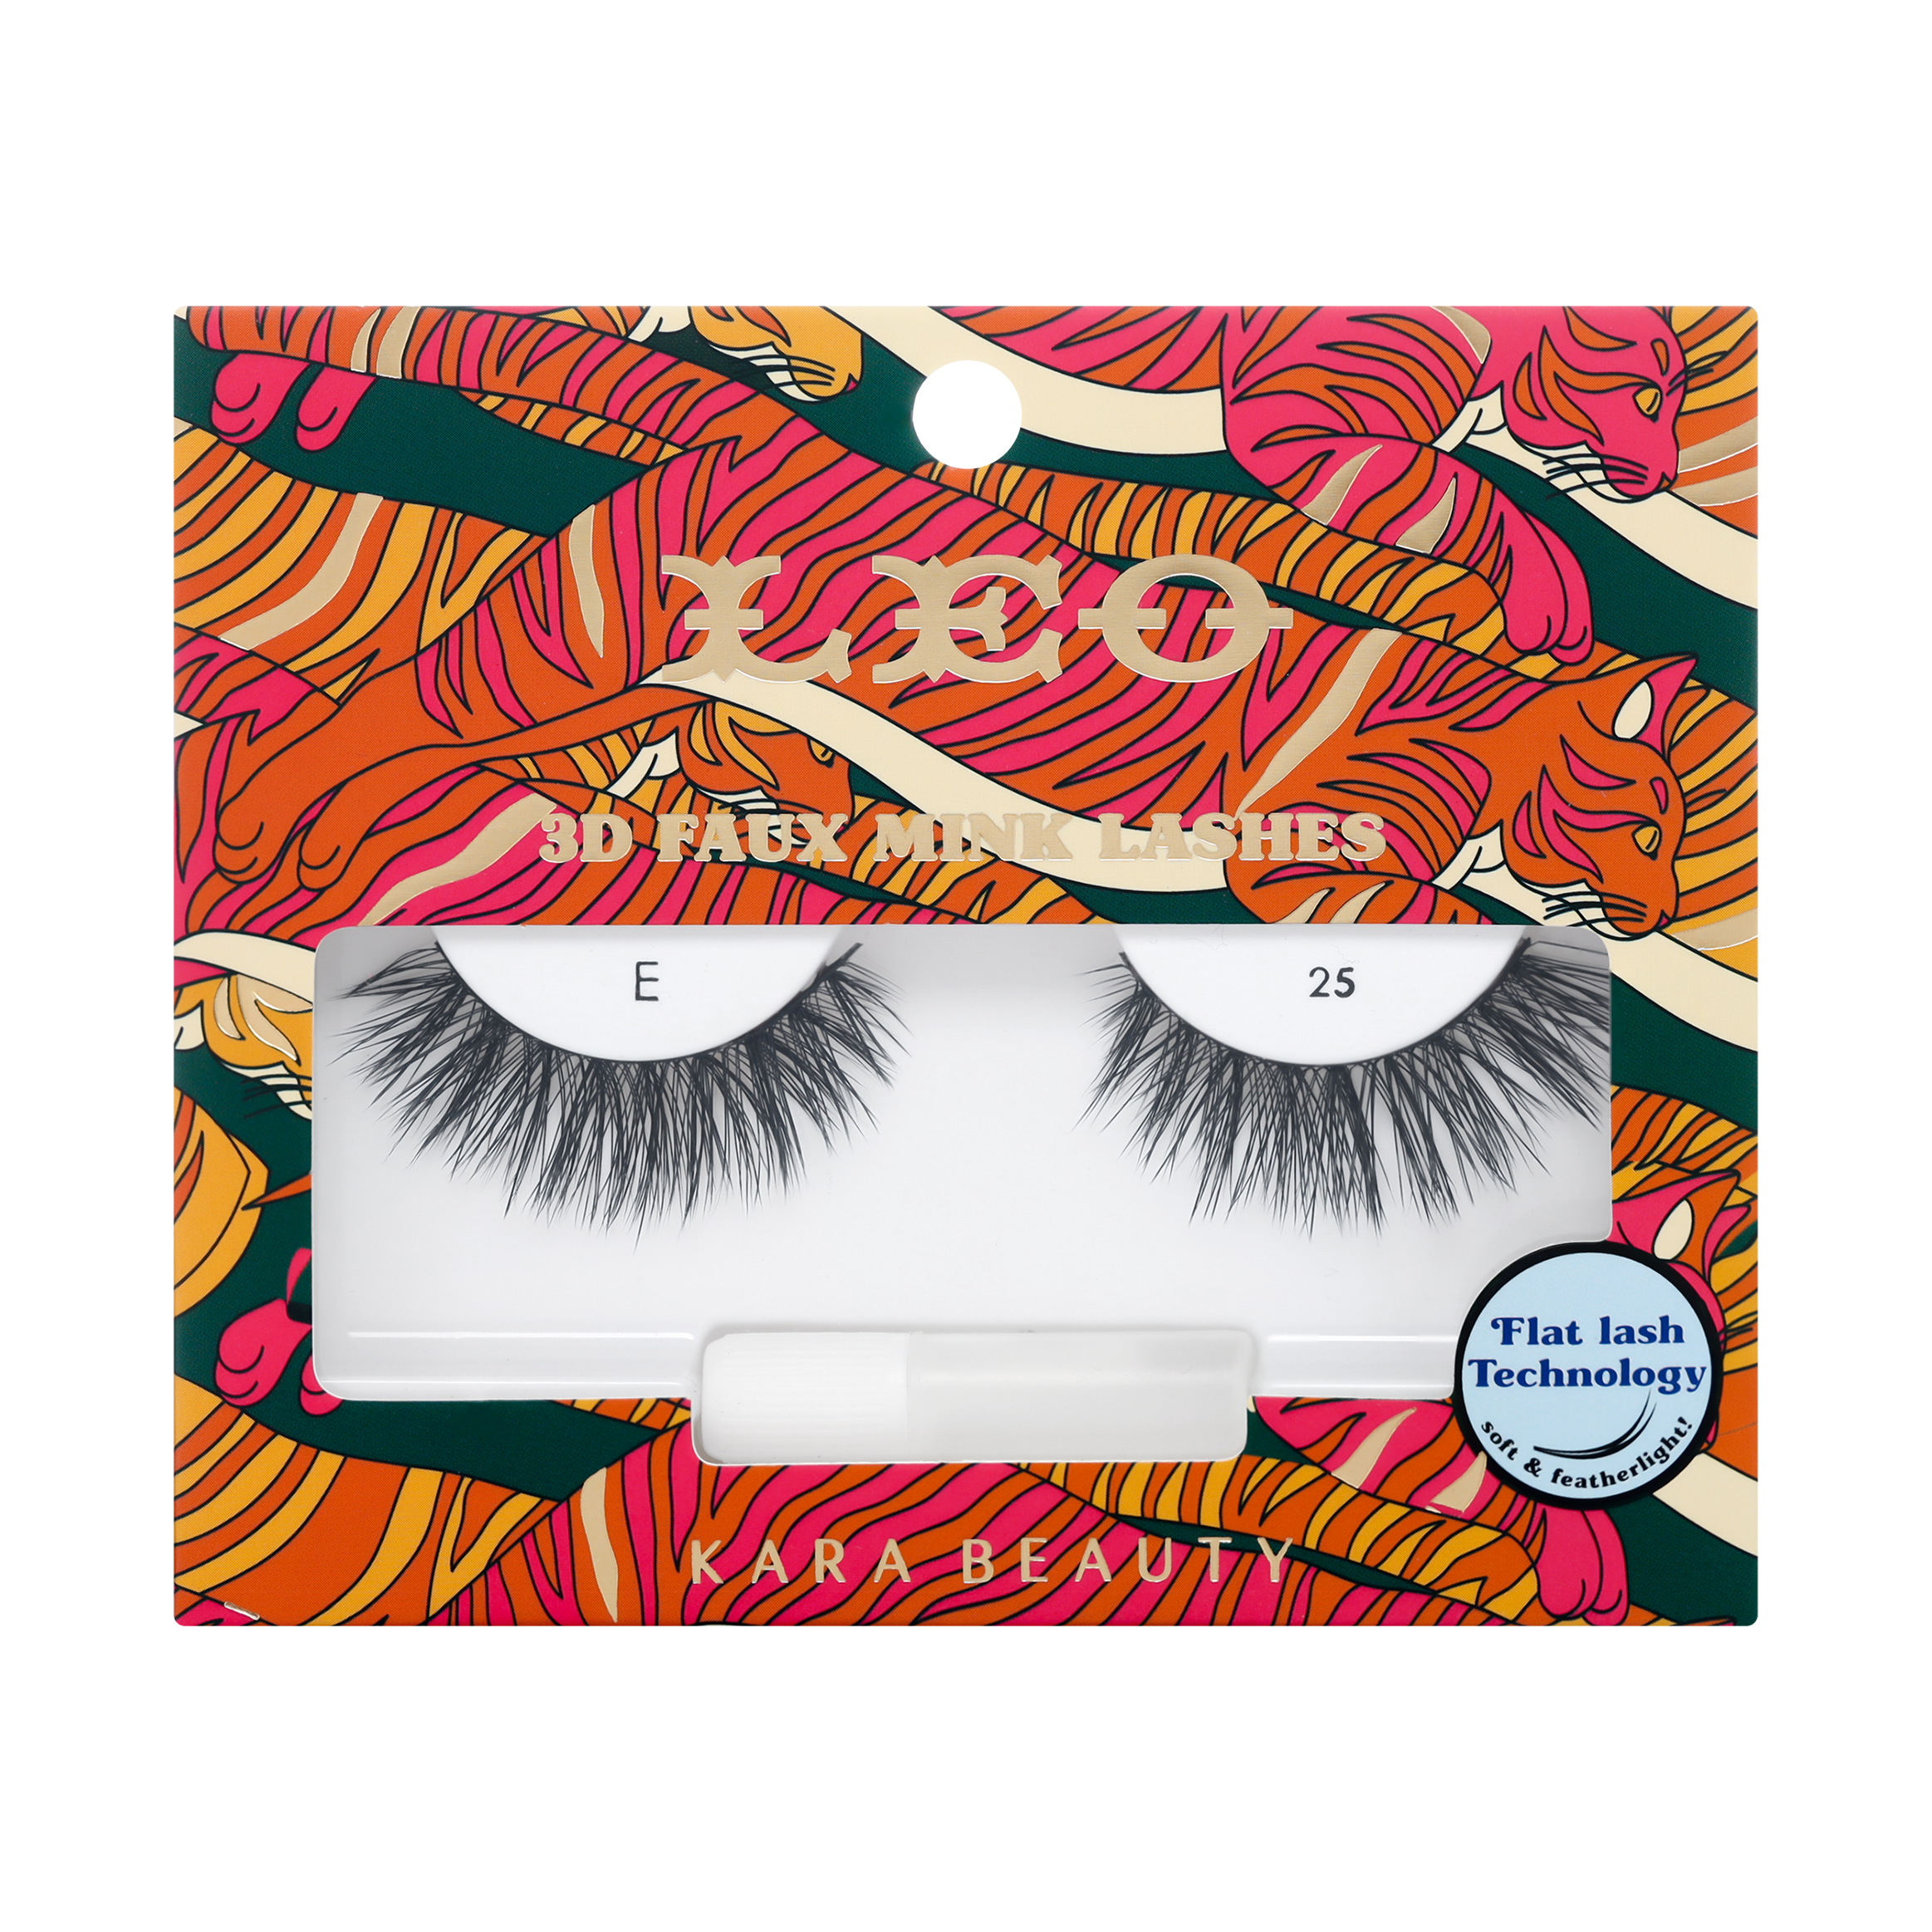 Kara Beauty's Zodiac Leo 3D Faux Mink Flat (Cashmere) False Eyelashes